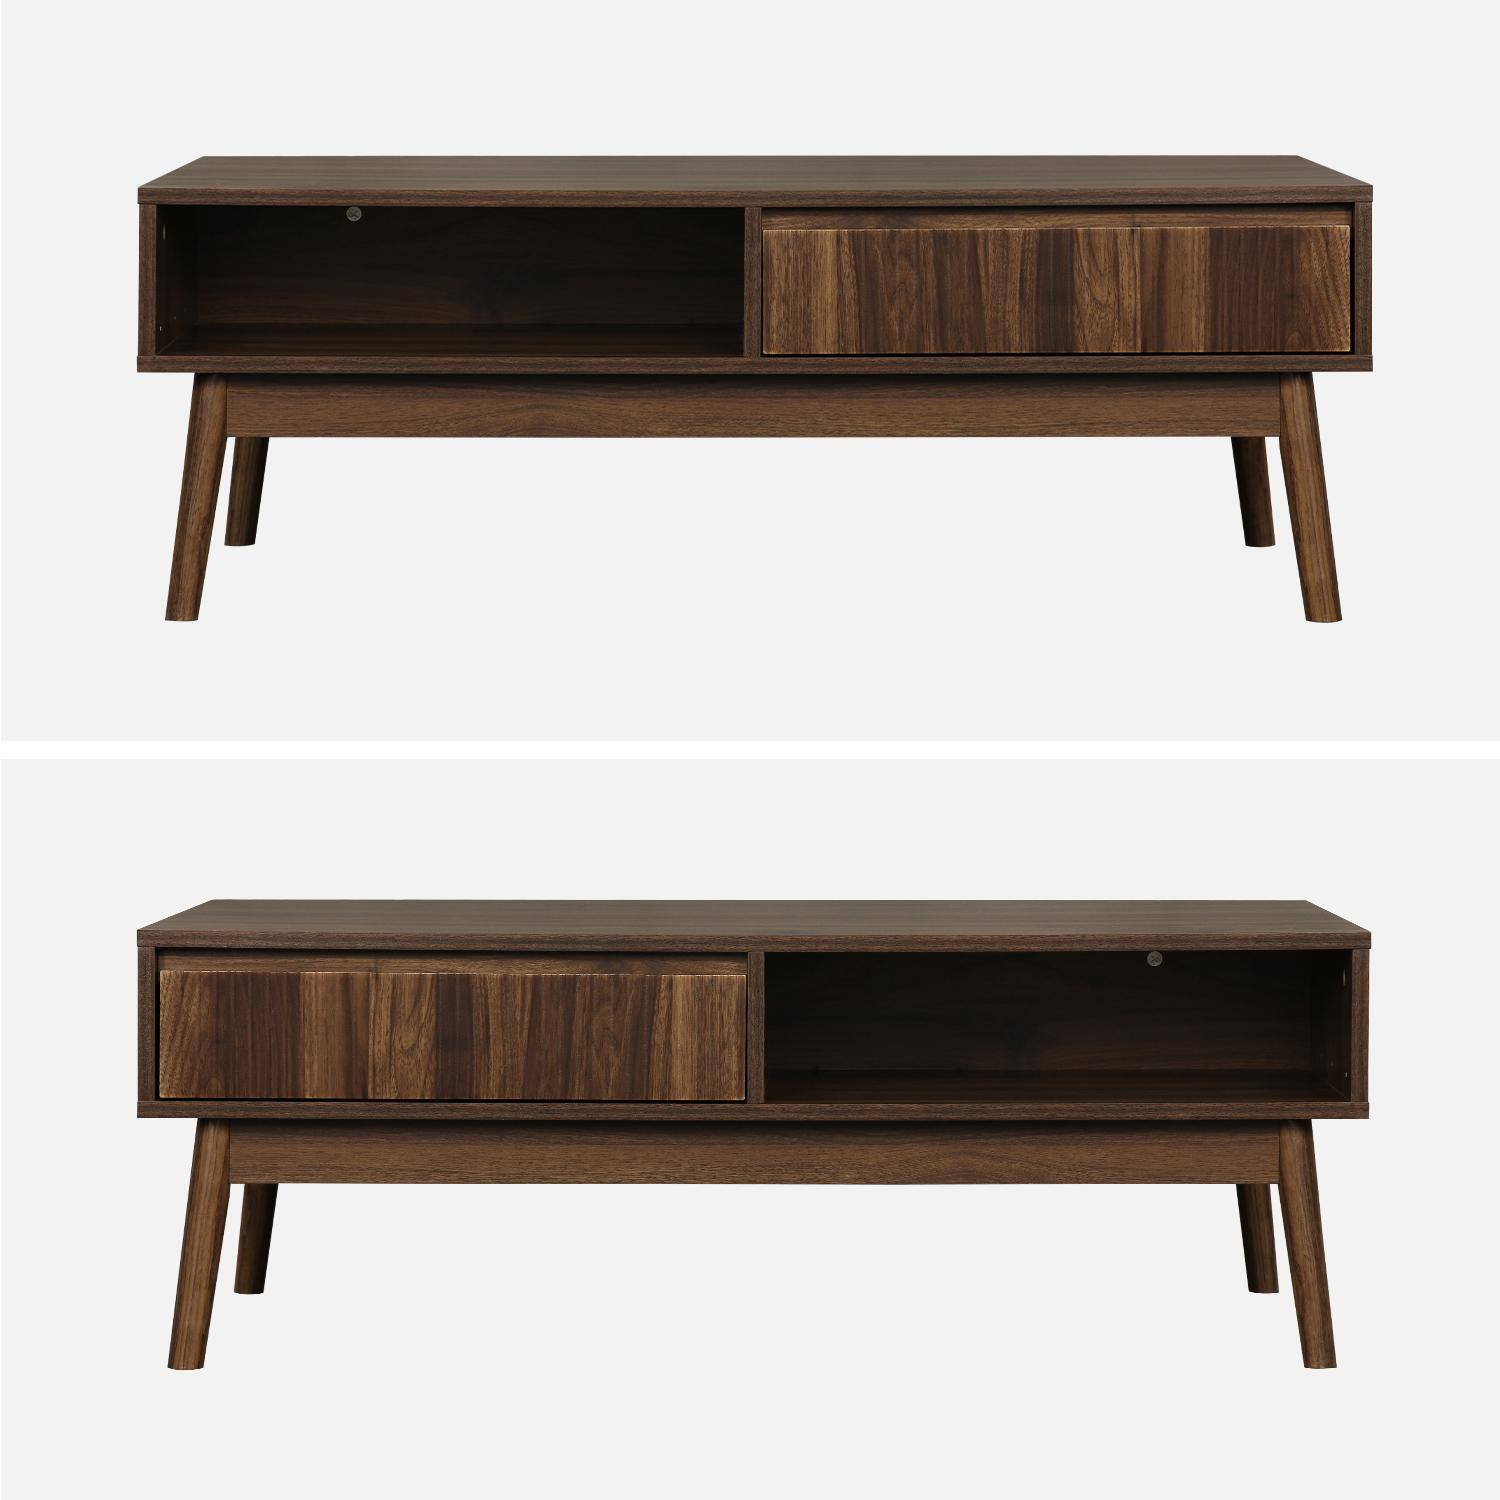 Wooden coffee table with one drawer storage, dark wood, L110xW59xH39cm,sweeek,Photo5